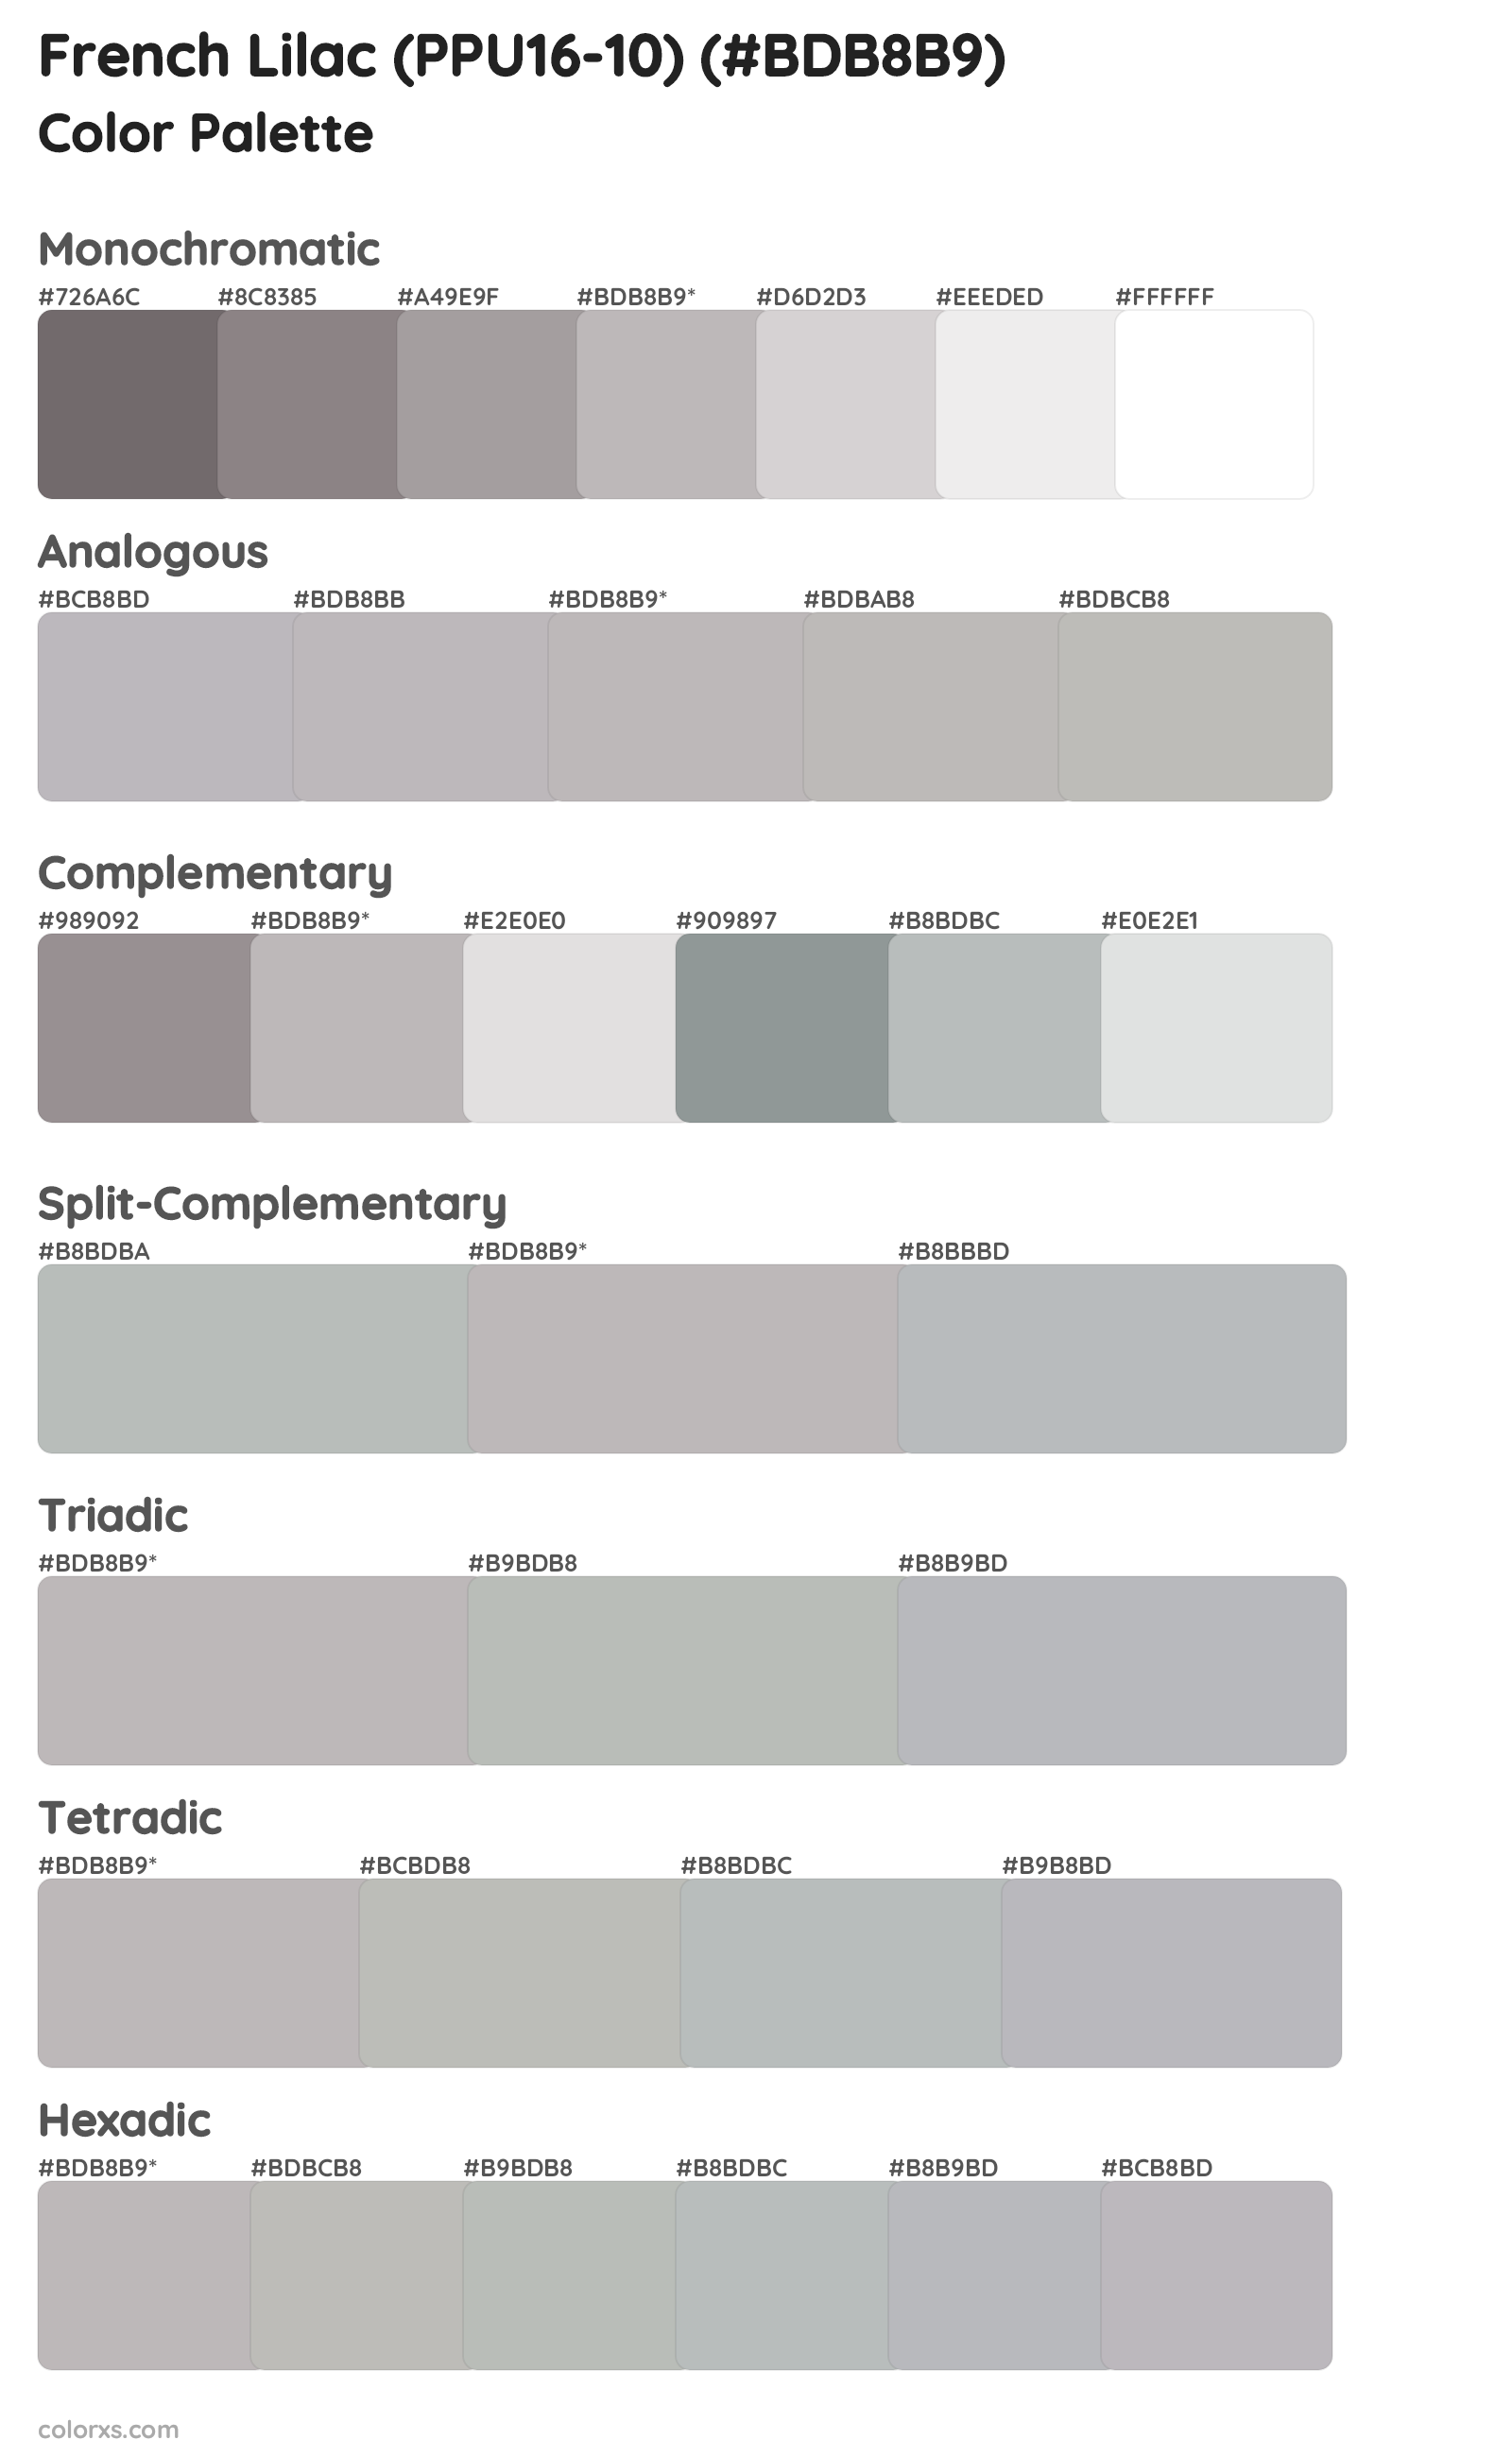 French Lilac (PPU16-10) Color Scheme Palettes